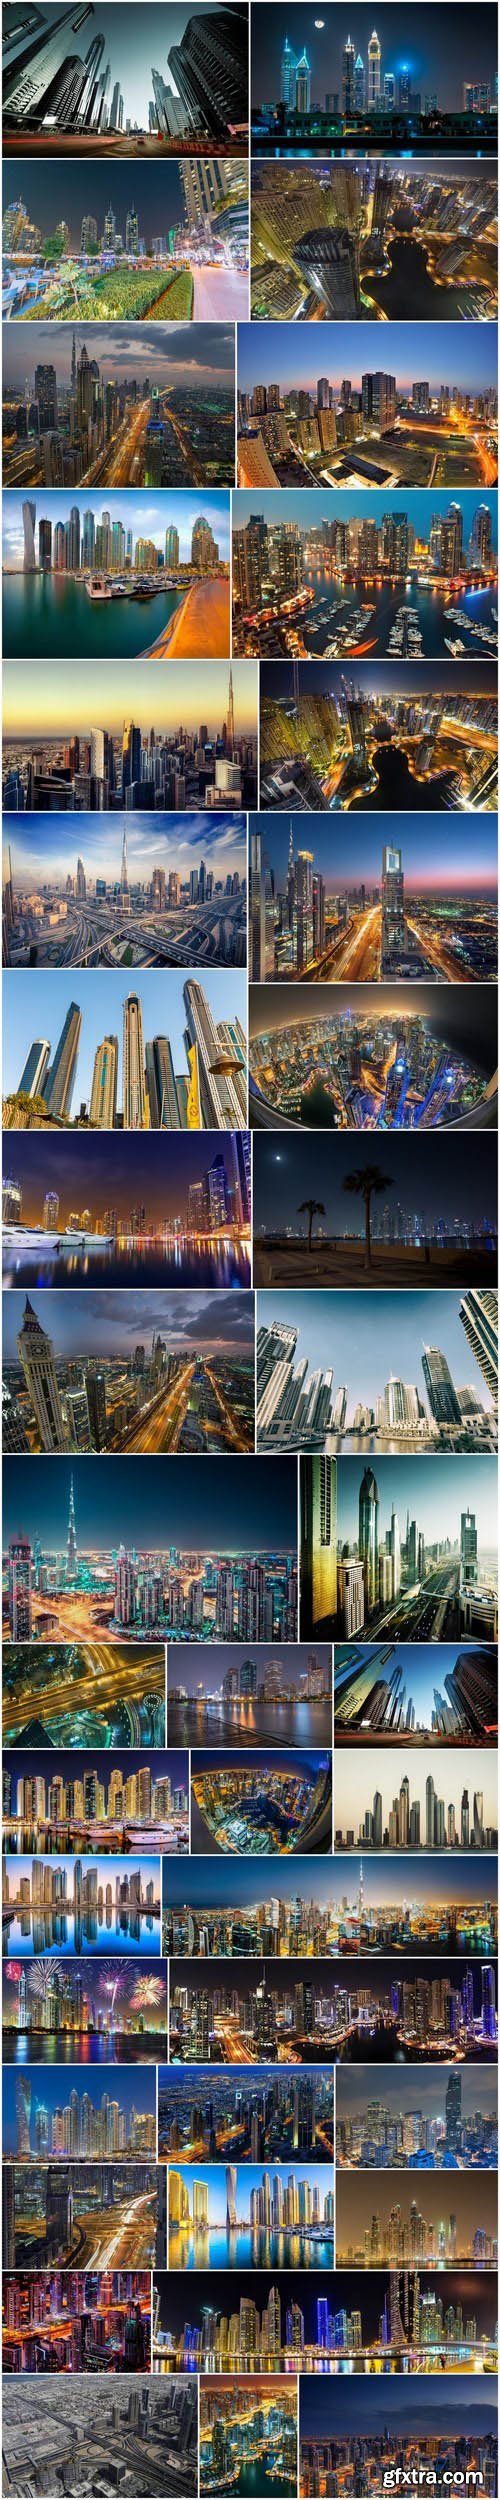 Dubai Travel - Skyscrapers, Set of 42xUHQ JPEG Professional Stock Images